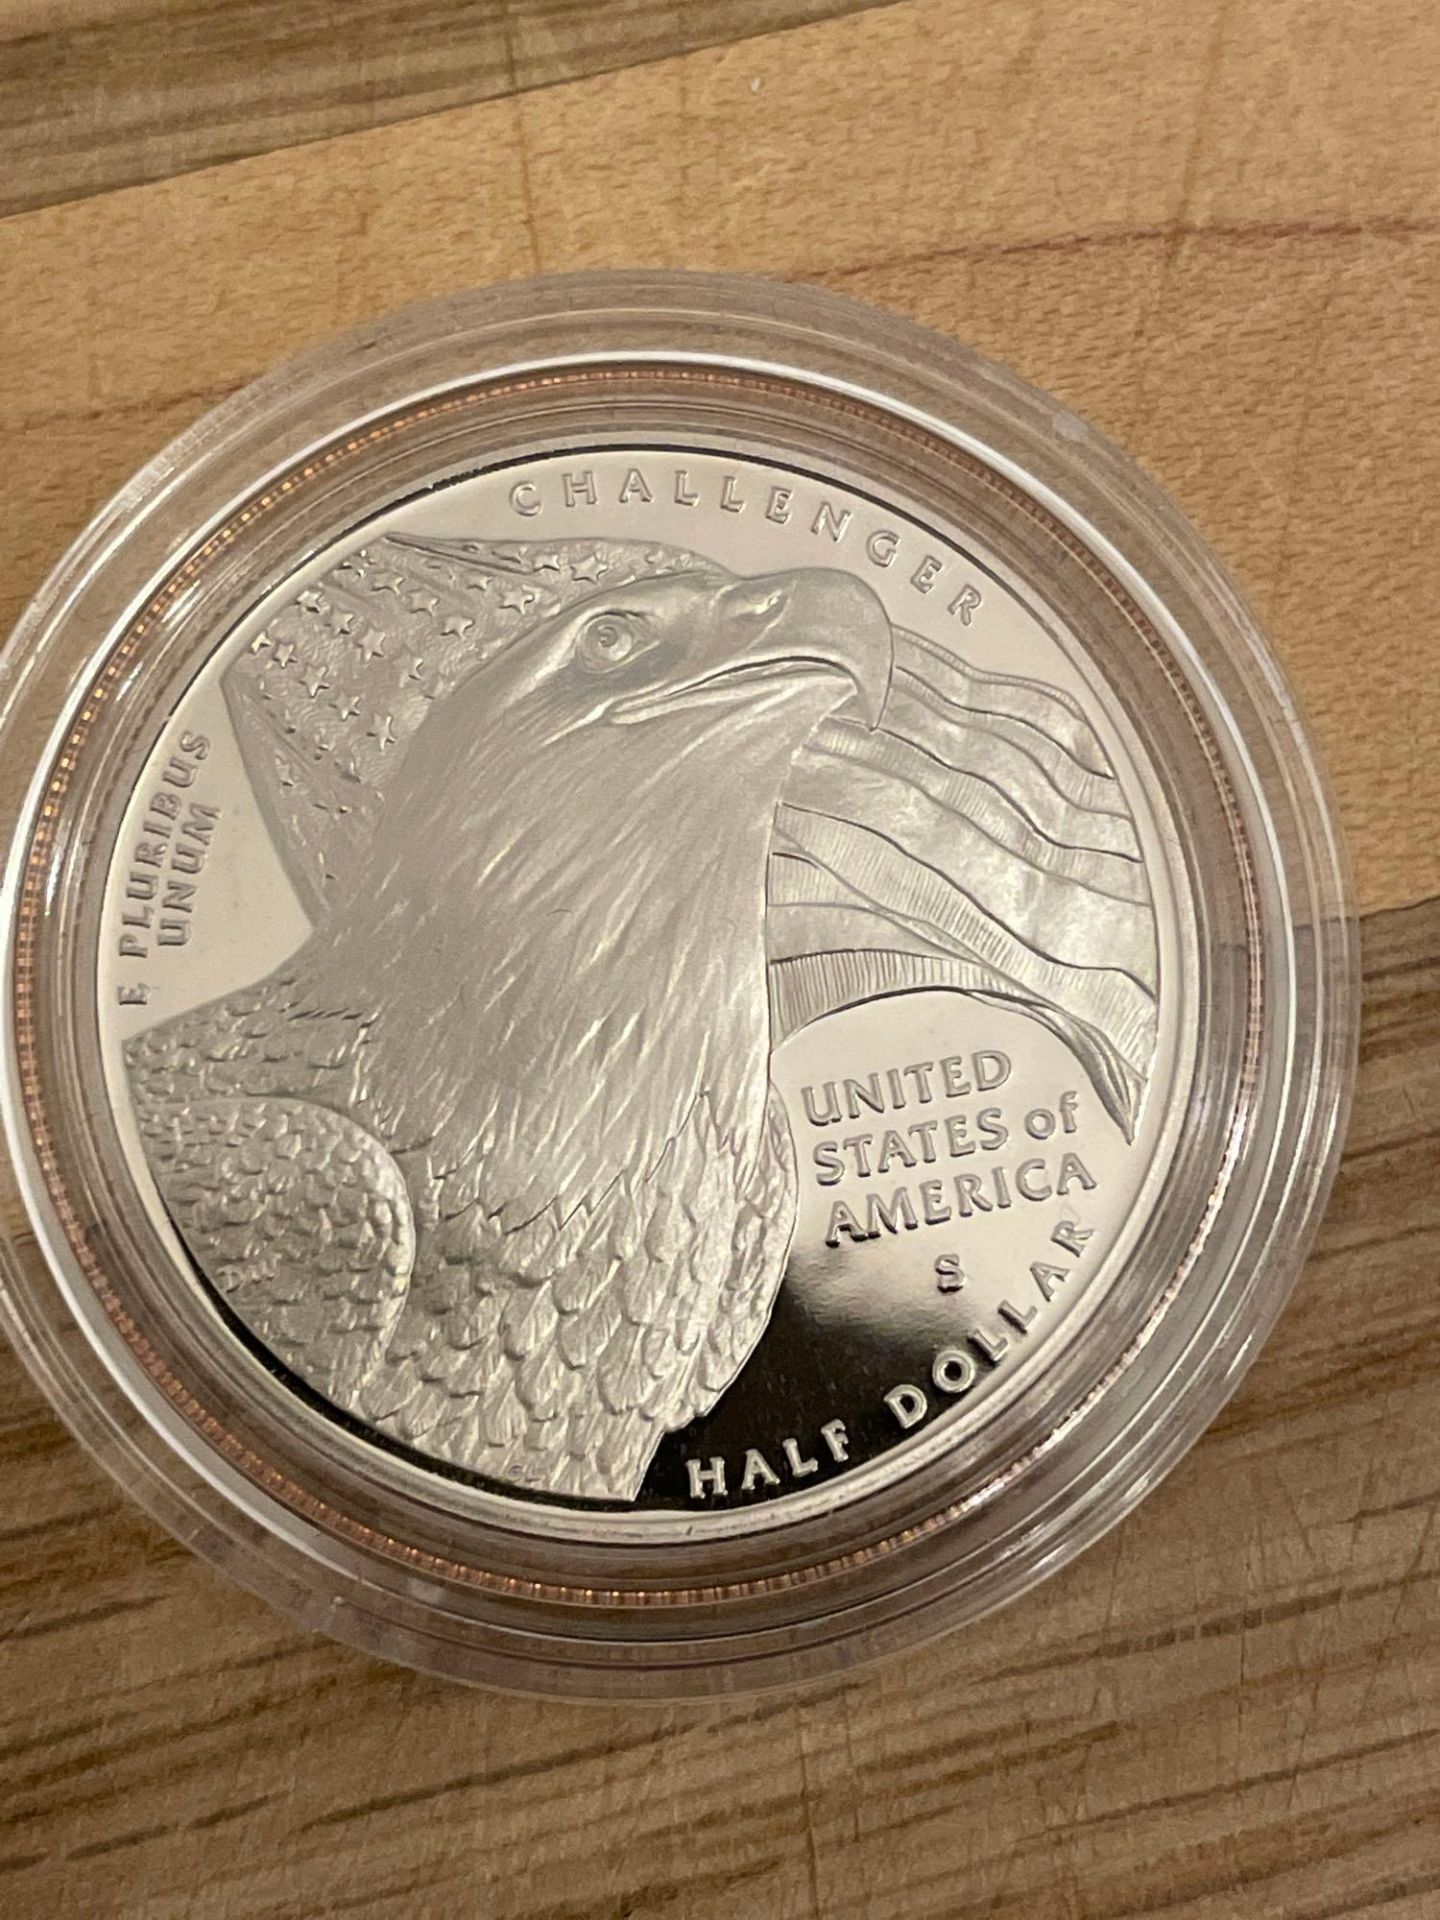 2008 bald eagle proof half dollar commemorative coin - Image 5 of 5